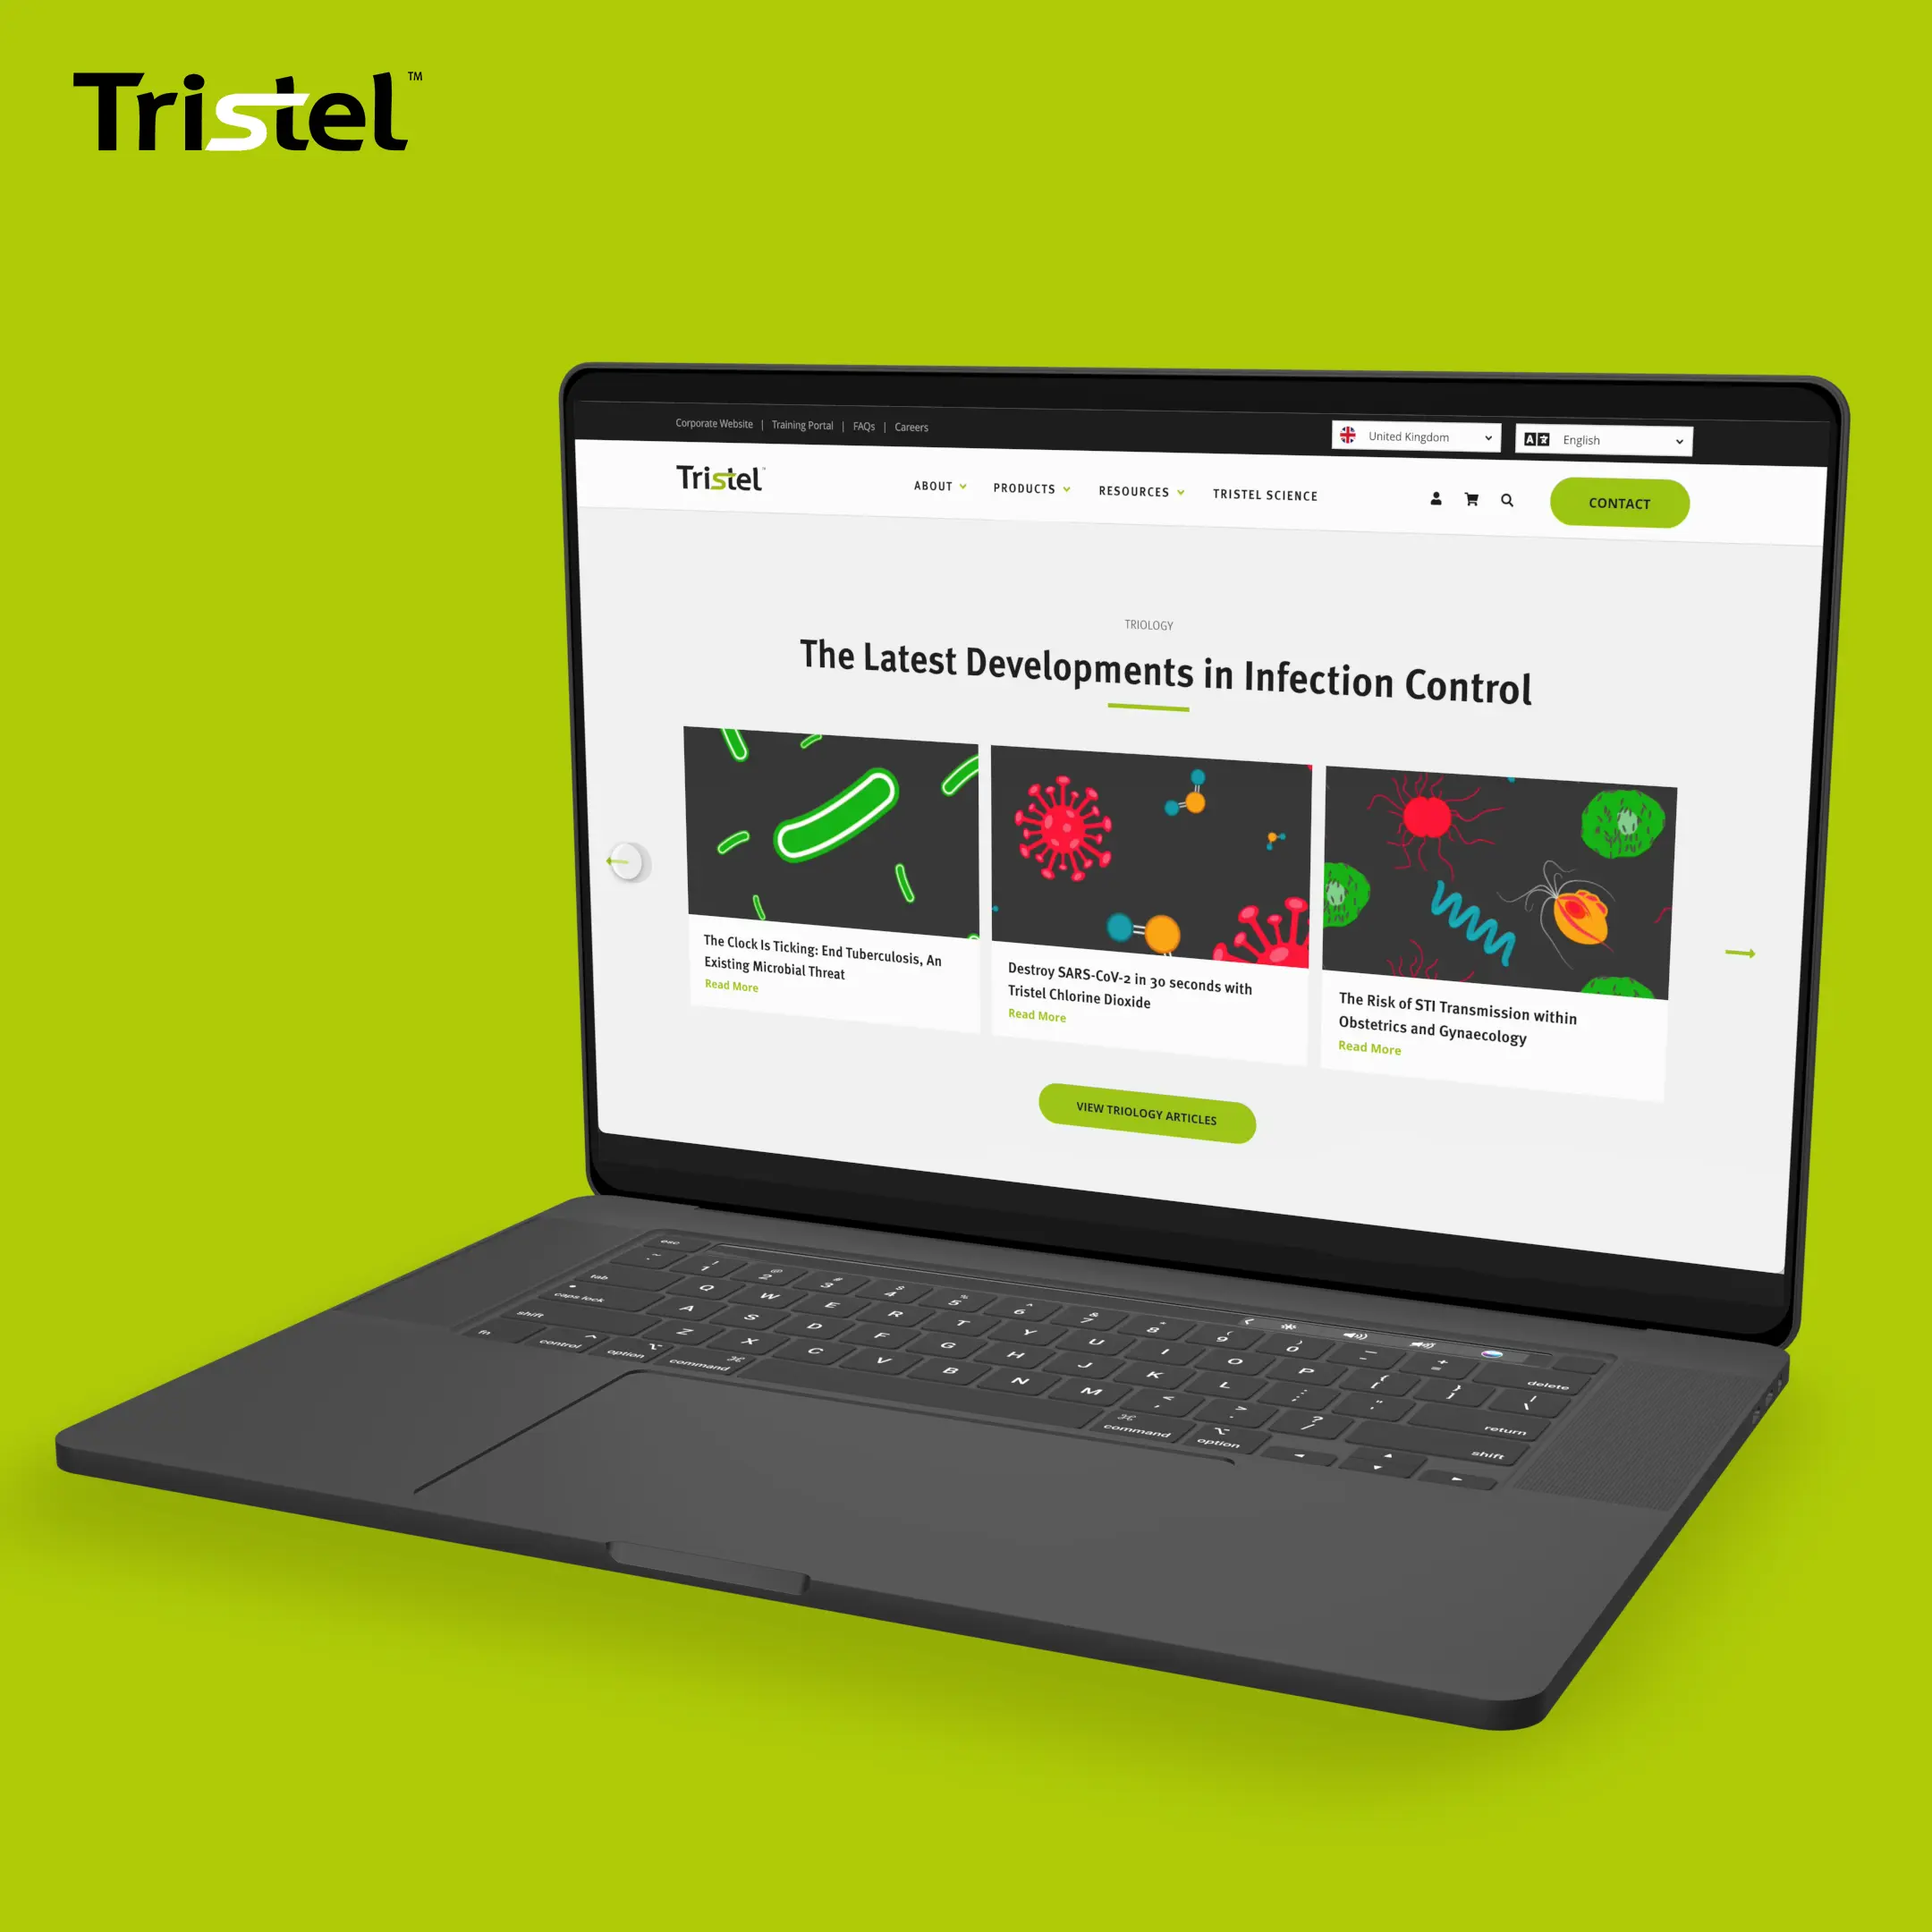 Tristel website and mockup and logo